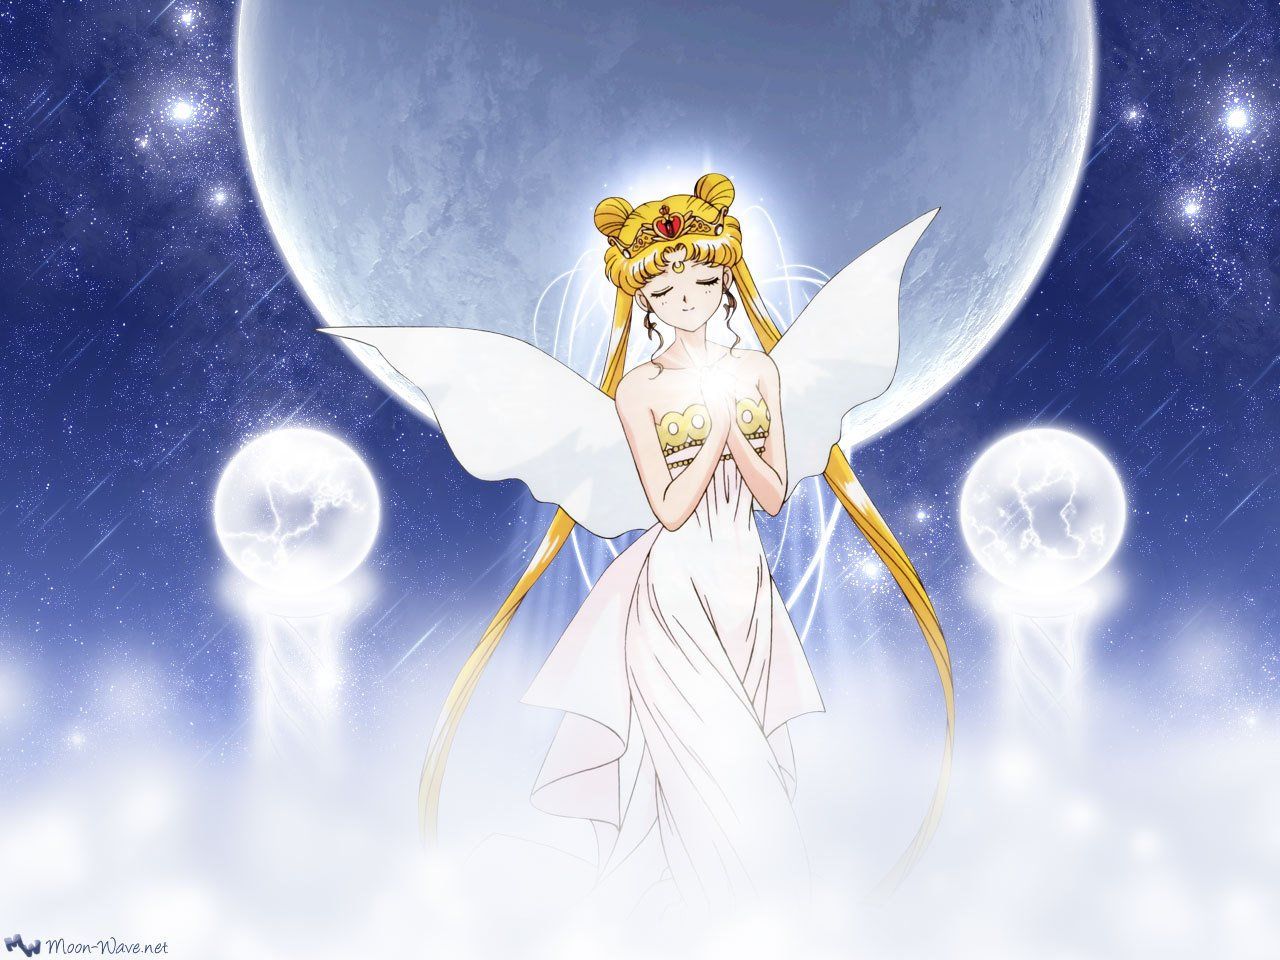 Free download Sailor Moon Wallpaper wallpaper Eternal Sailor Moon Wallpaper [1280x960] for your Desktop, Mobile & Tablet. Explore Sailor Moon Christmas Wallpaper. Moon Wallpaper Hd, Sailor Moon Wallpaper HD